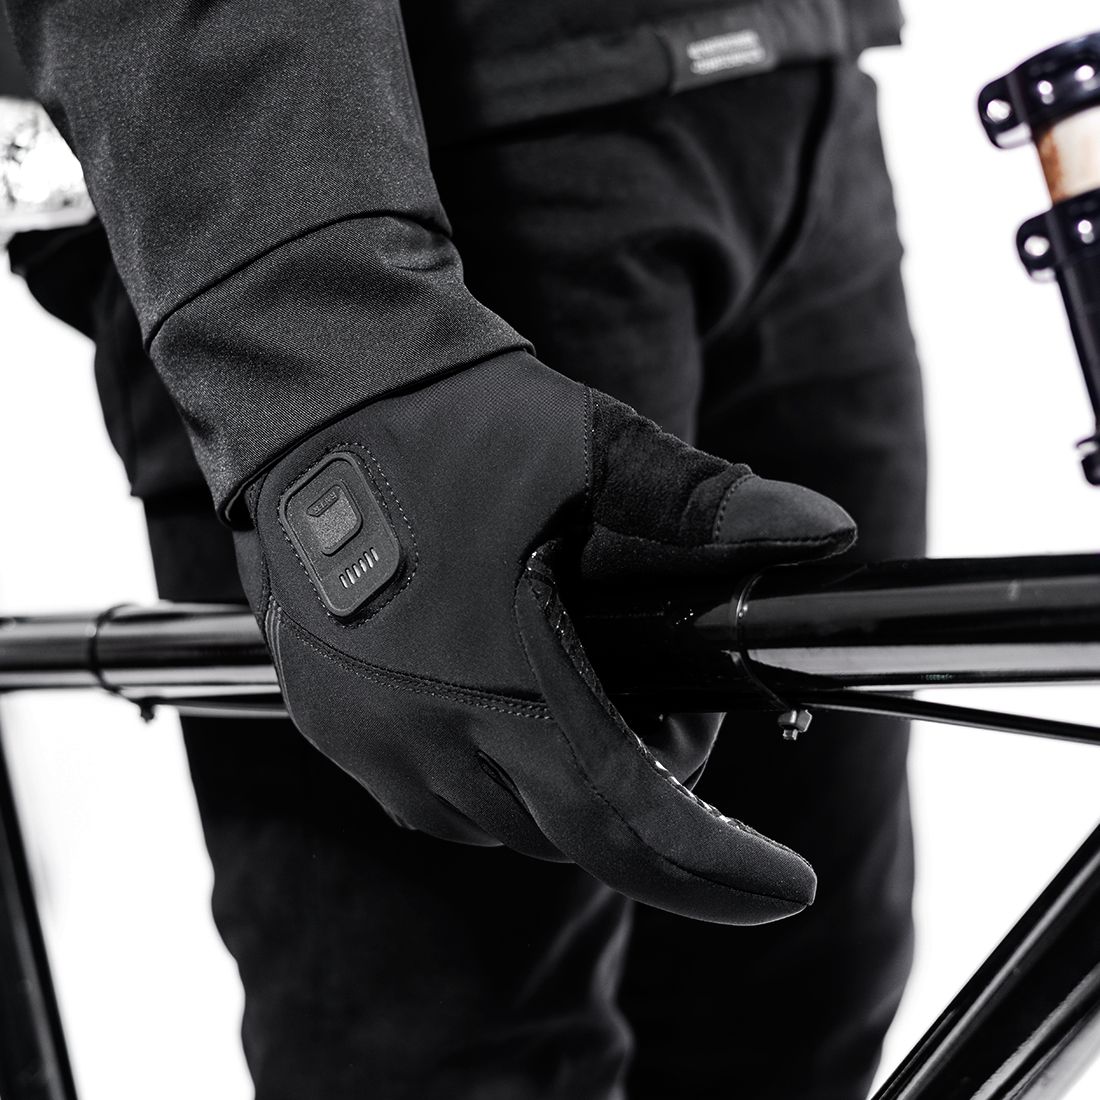 E-GLOVE 4 - Heated cycling gloves